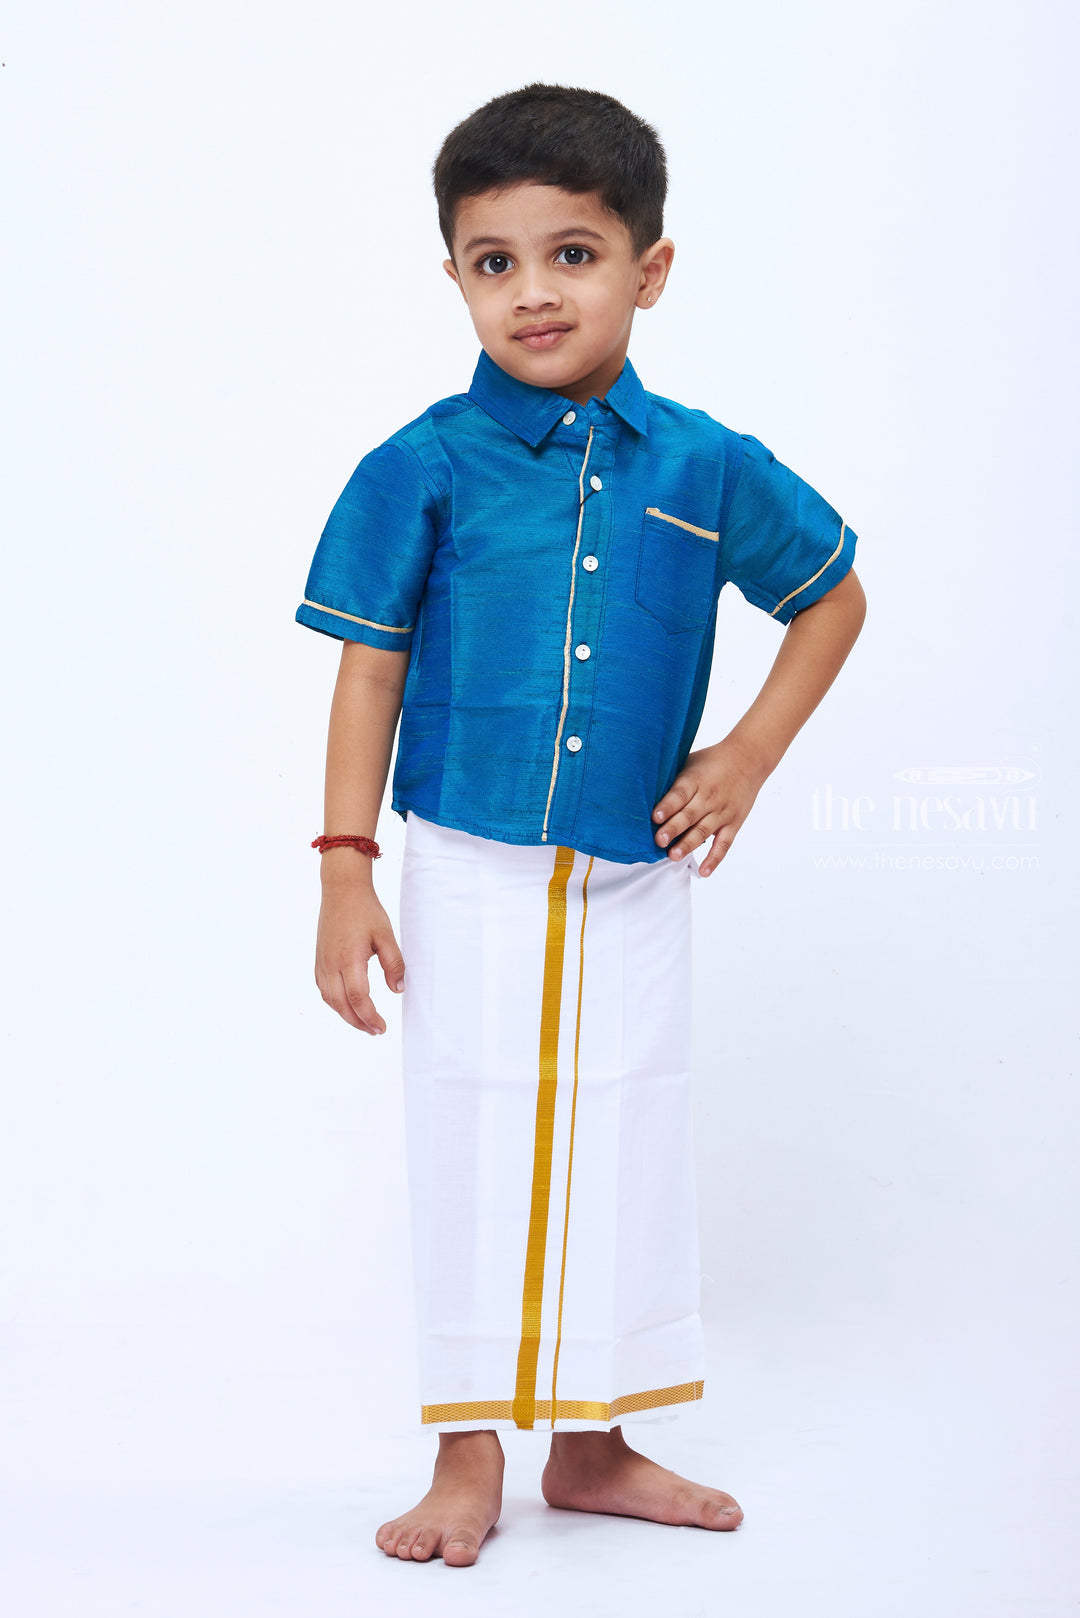 The Nesavu Boys Vesti Traditional Cotton Vesti for Boys Elegance in White and Gold Nesavu 12 (3M) / White / Cotton D005-12 Boys White and Gold Traditional Vesti/Dothi | Ethnic Indian Clothing for Kids | The Nesavu